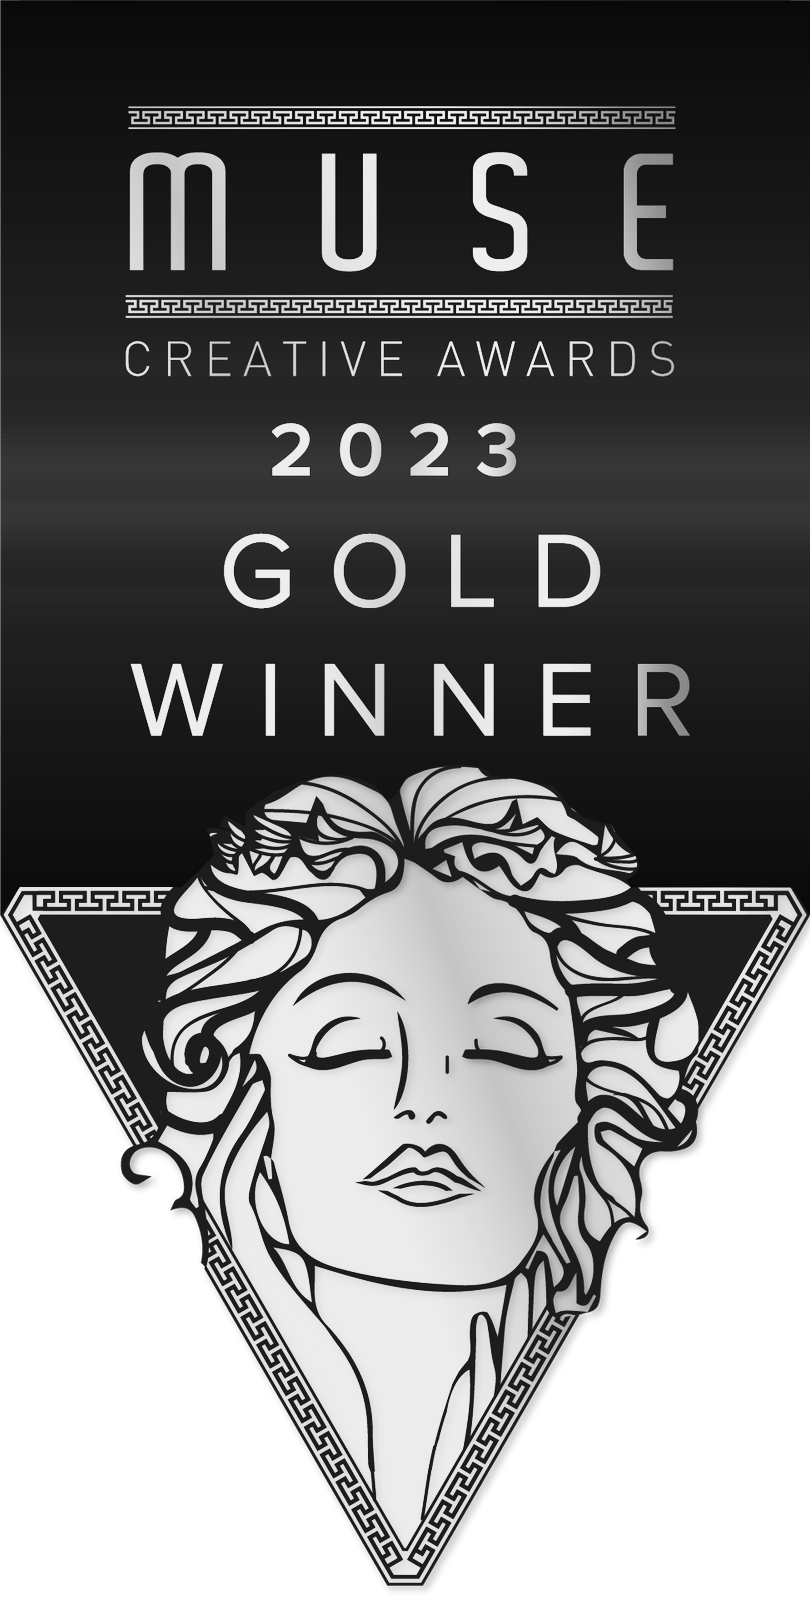 Muse Creative Awards Gold Winner 2023.